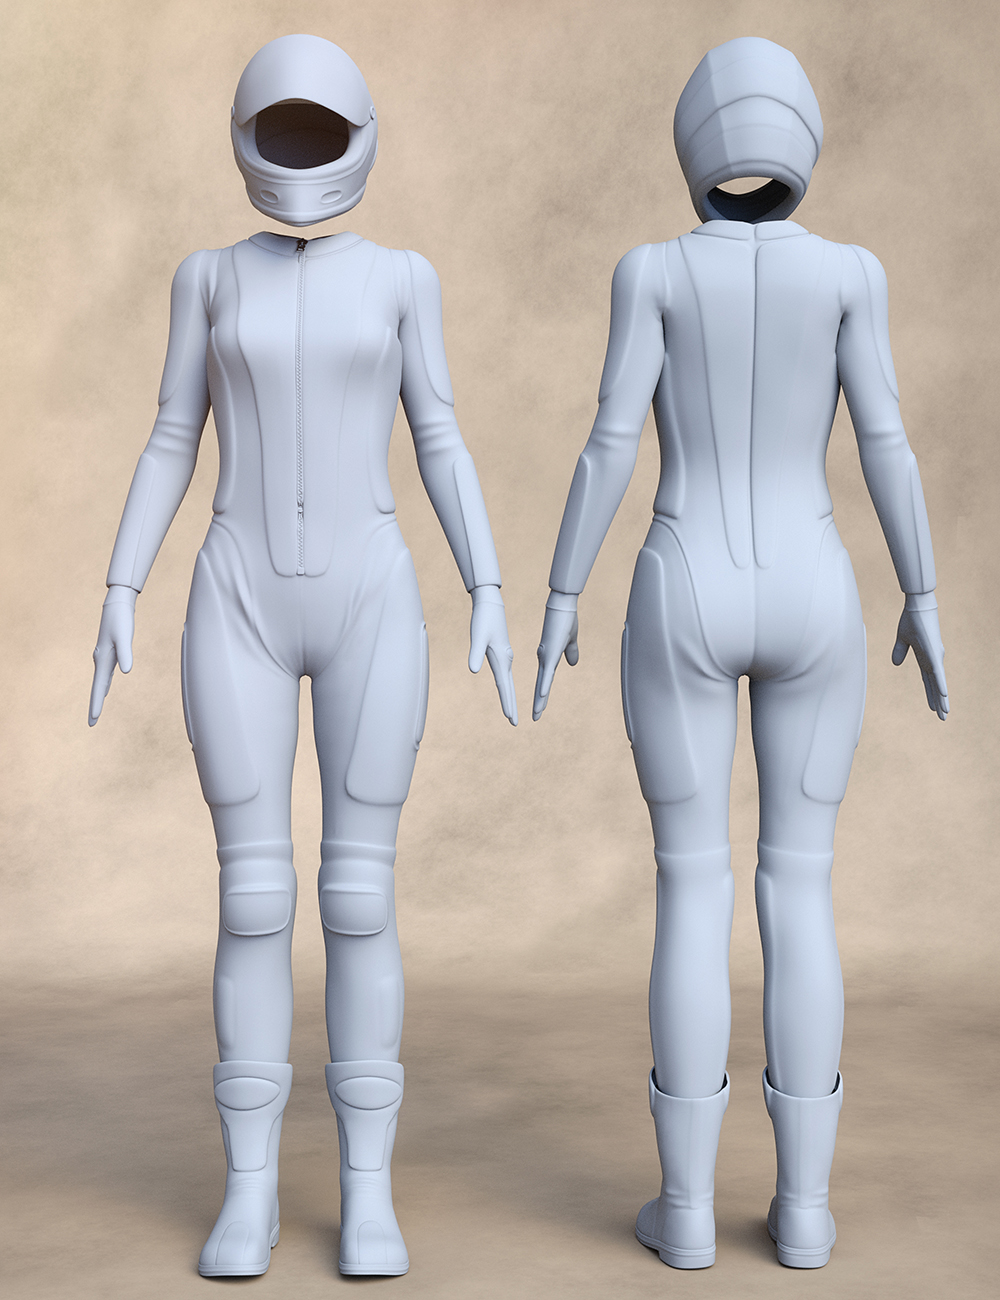 Motorbike Suit Outfit for Genesis 8 Female(s) by: NikisatezShox-Design, 3D Models by Daz 3D